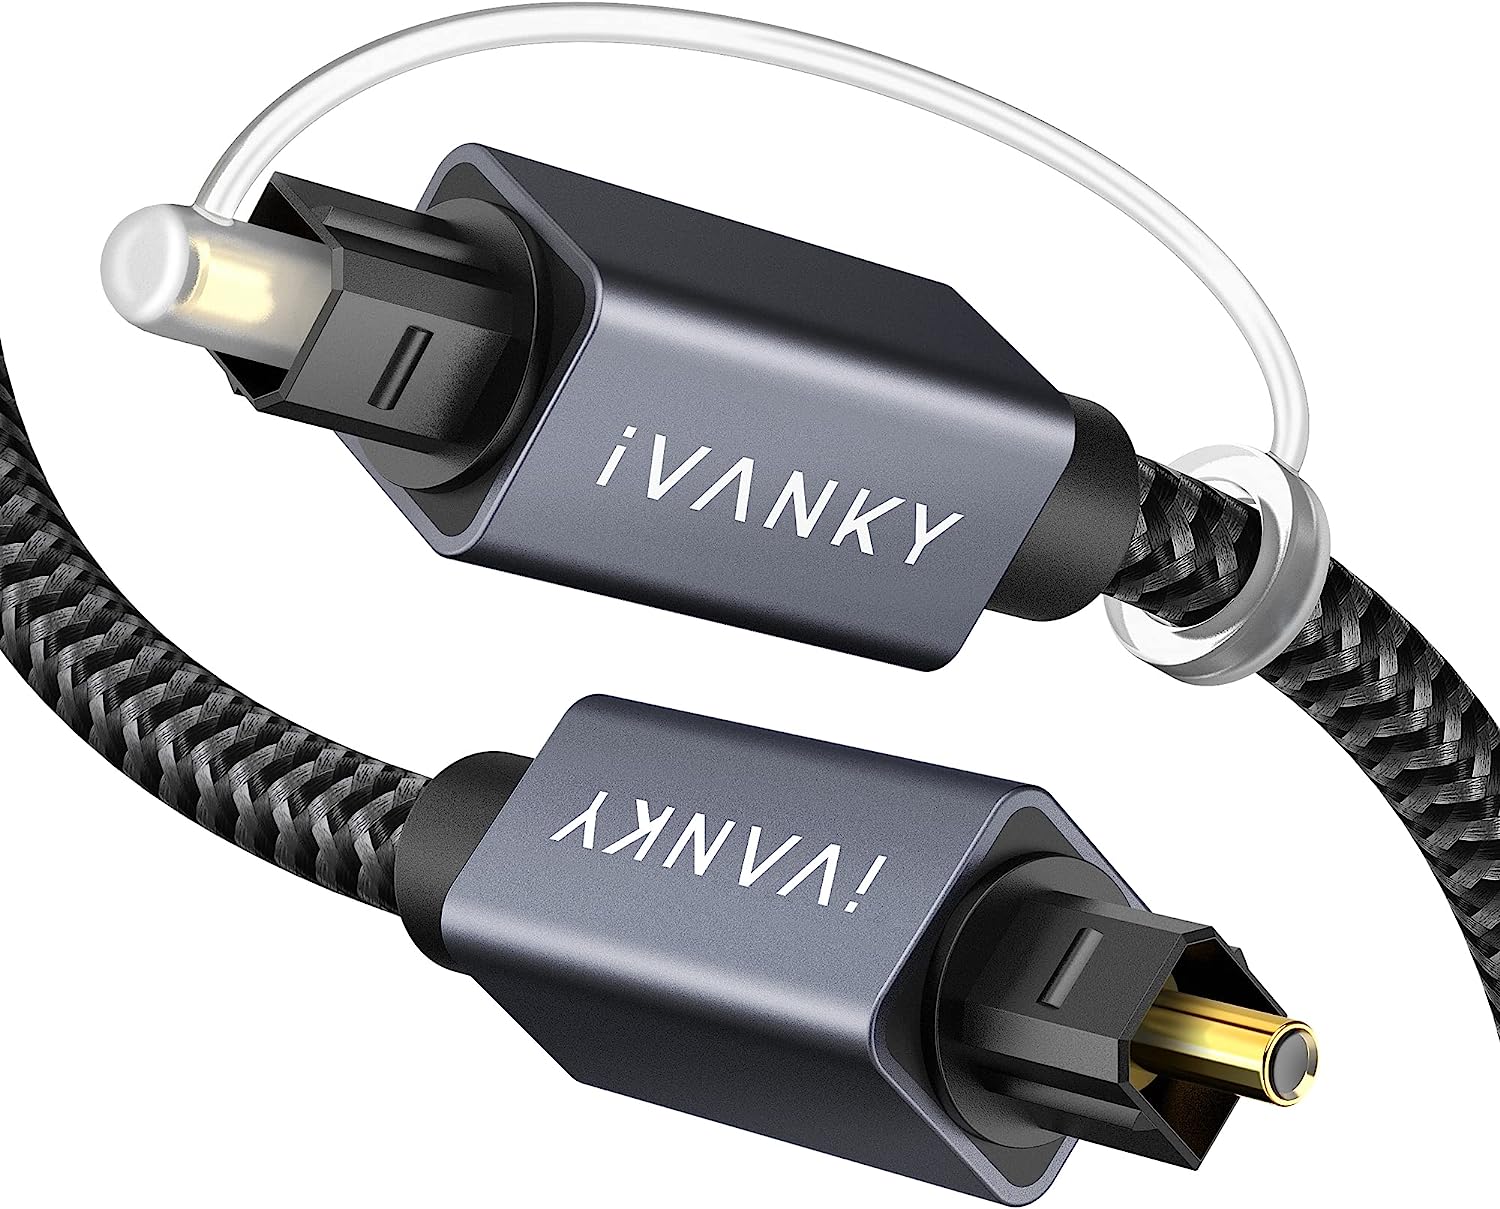 IVANKY Optical Audio Cable 10ft/3M, Slim Braided Fiber [...]